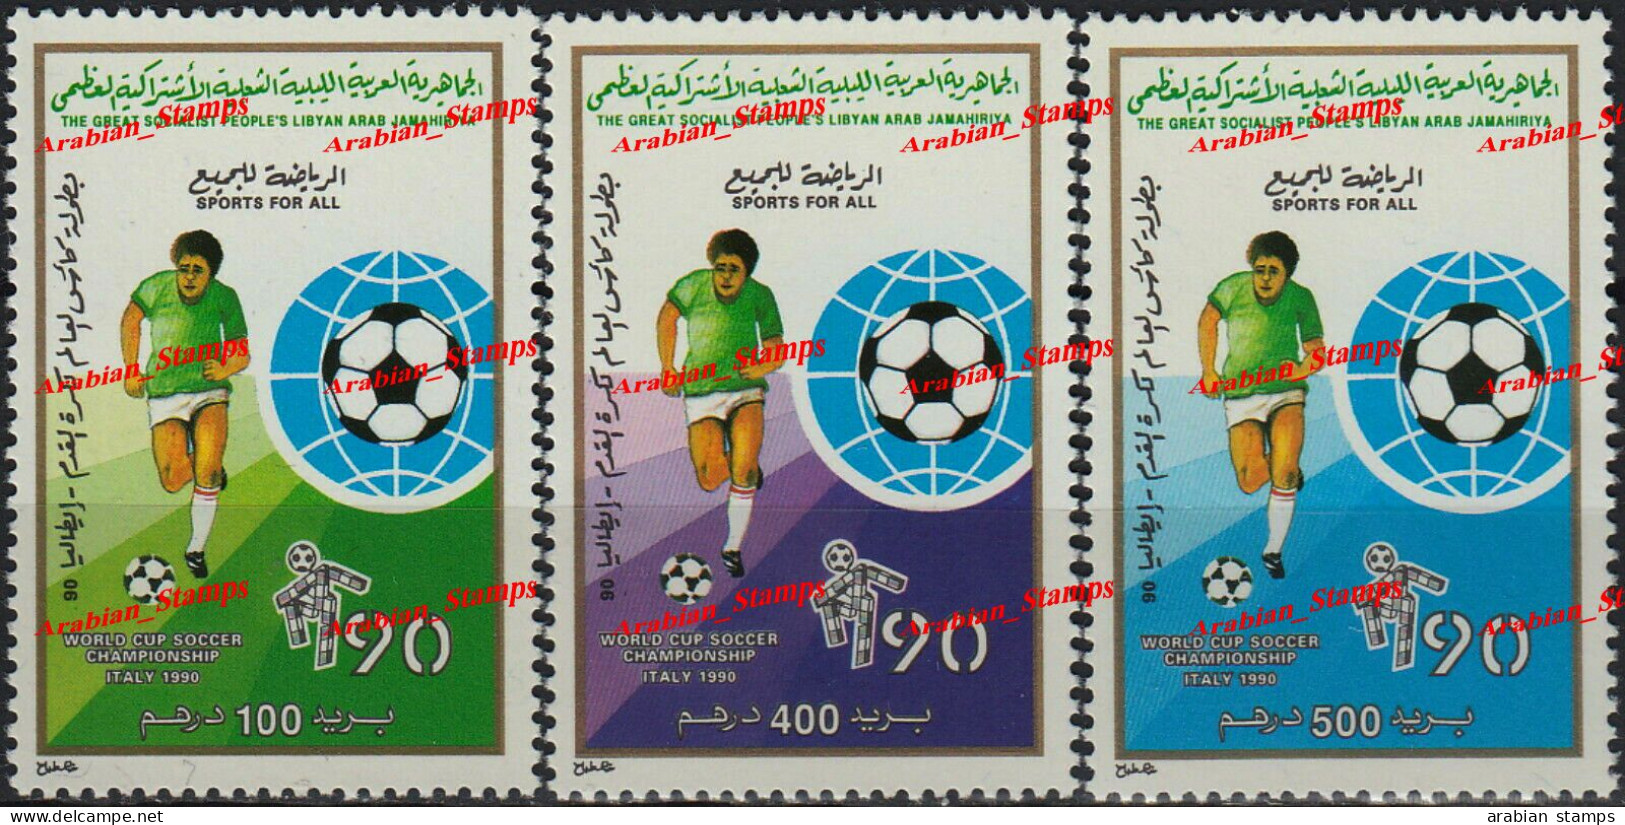 LIBYA 1990 SOCCER FOOTBALL WORLD CUP COUPE DU MONDE ITALY ITALIE SET MNH - Libye